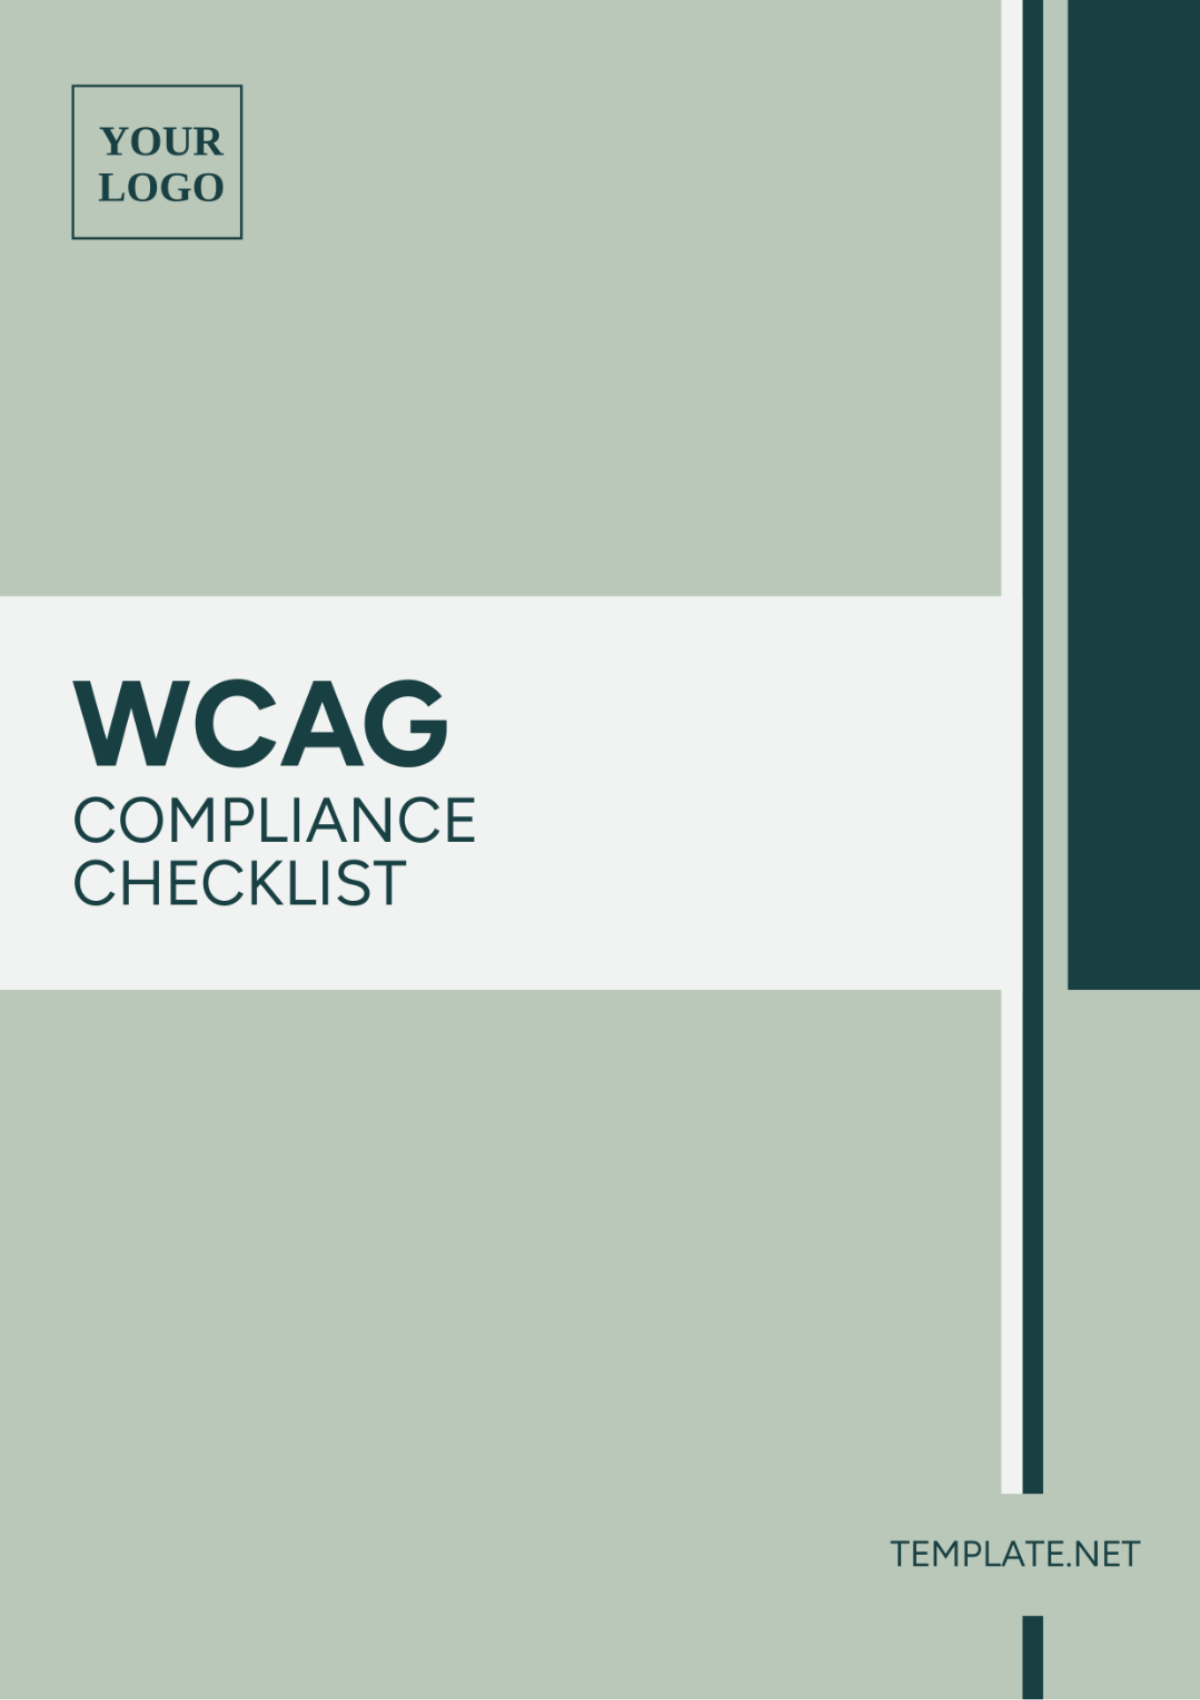 WCAG Compliance Checklist Template